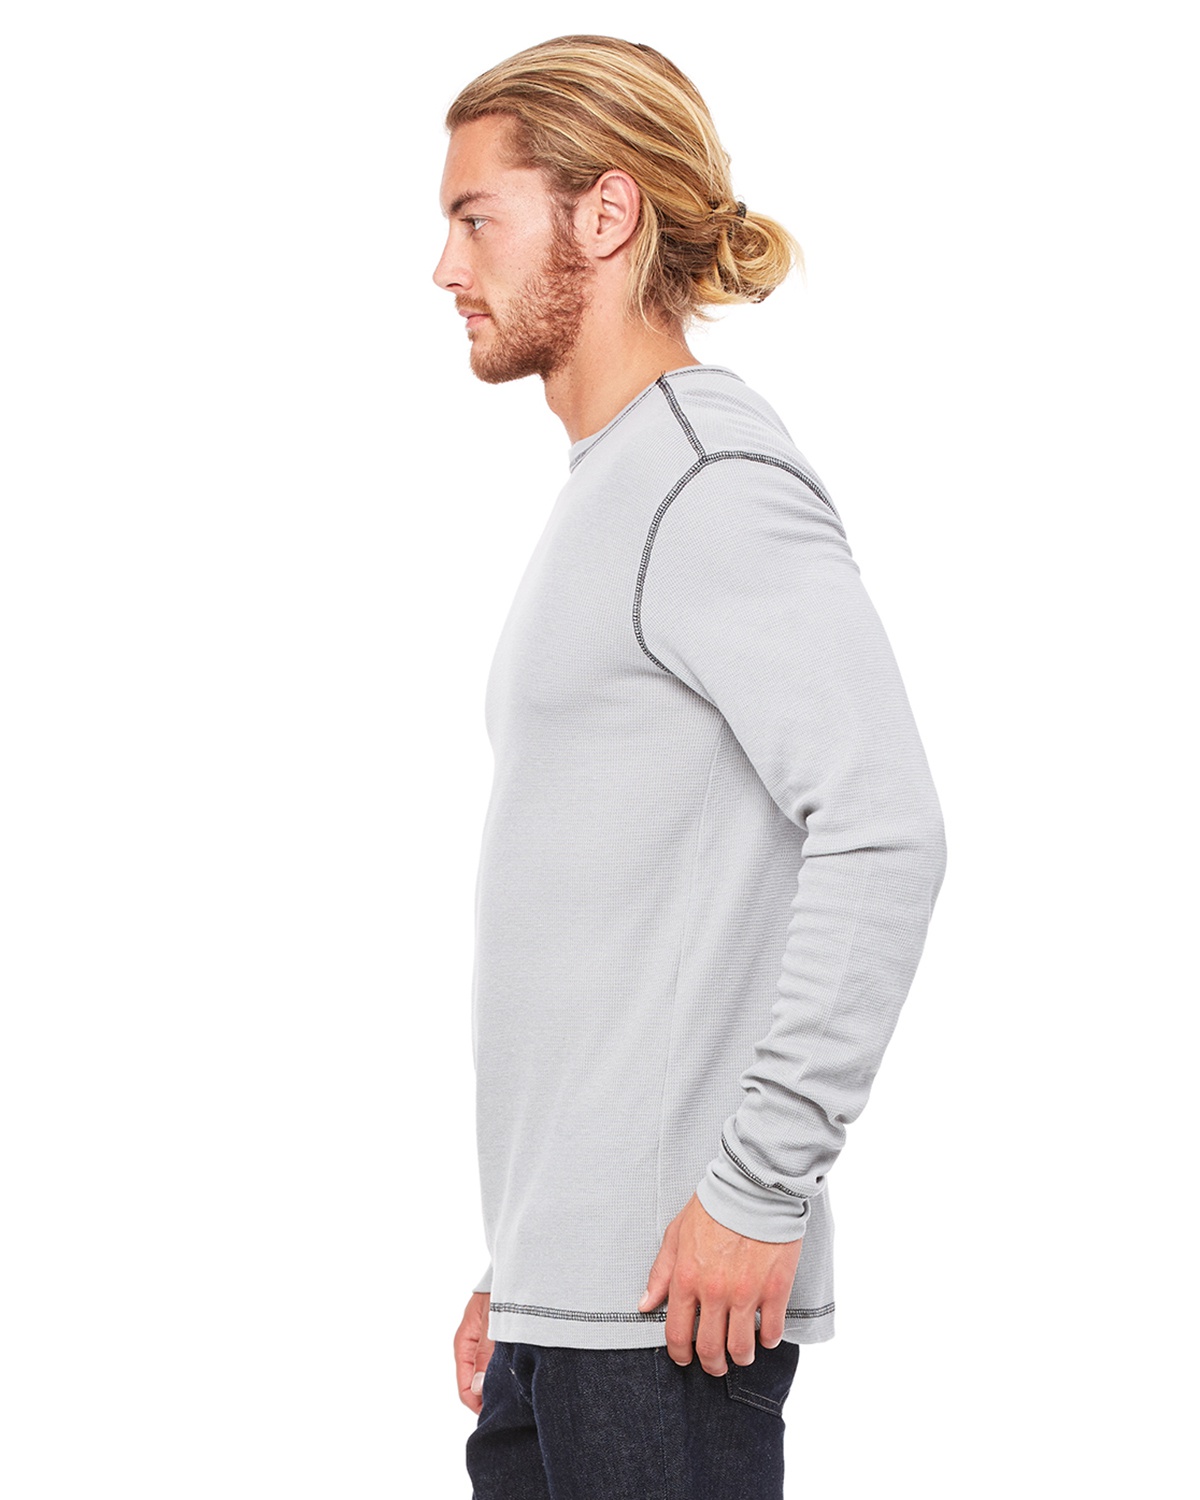 'Bella Canvas 3500 Men's Thermal Long-Sleeve T-Shirt'